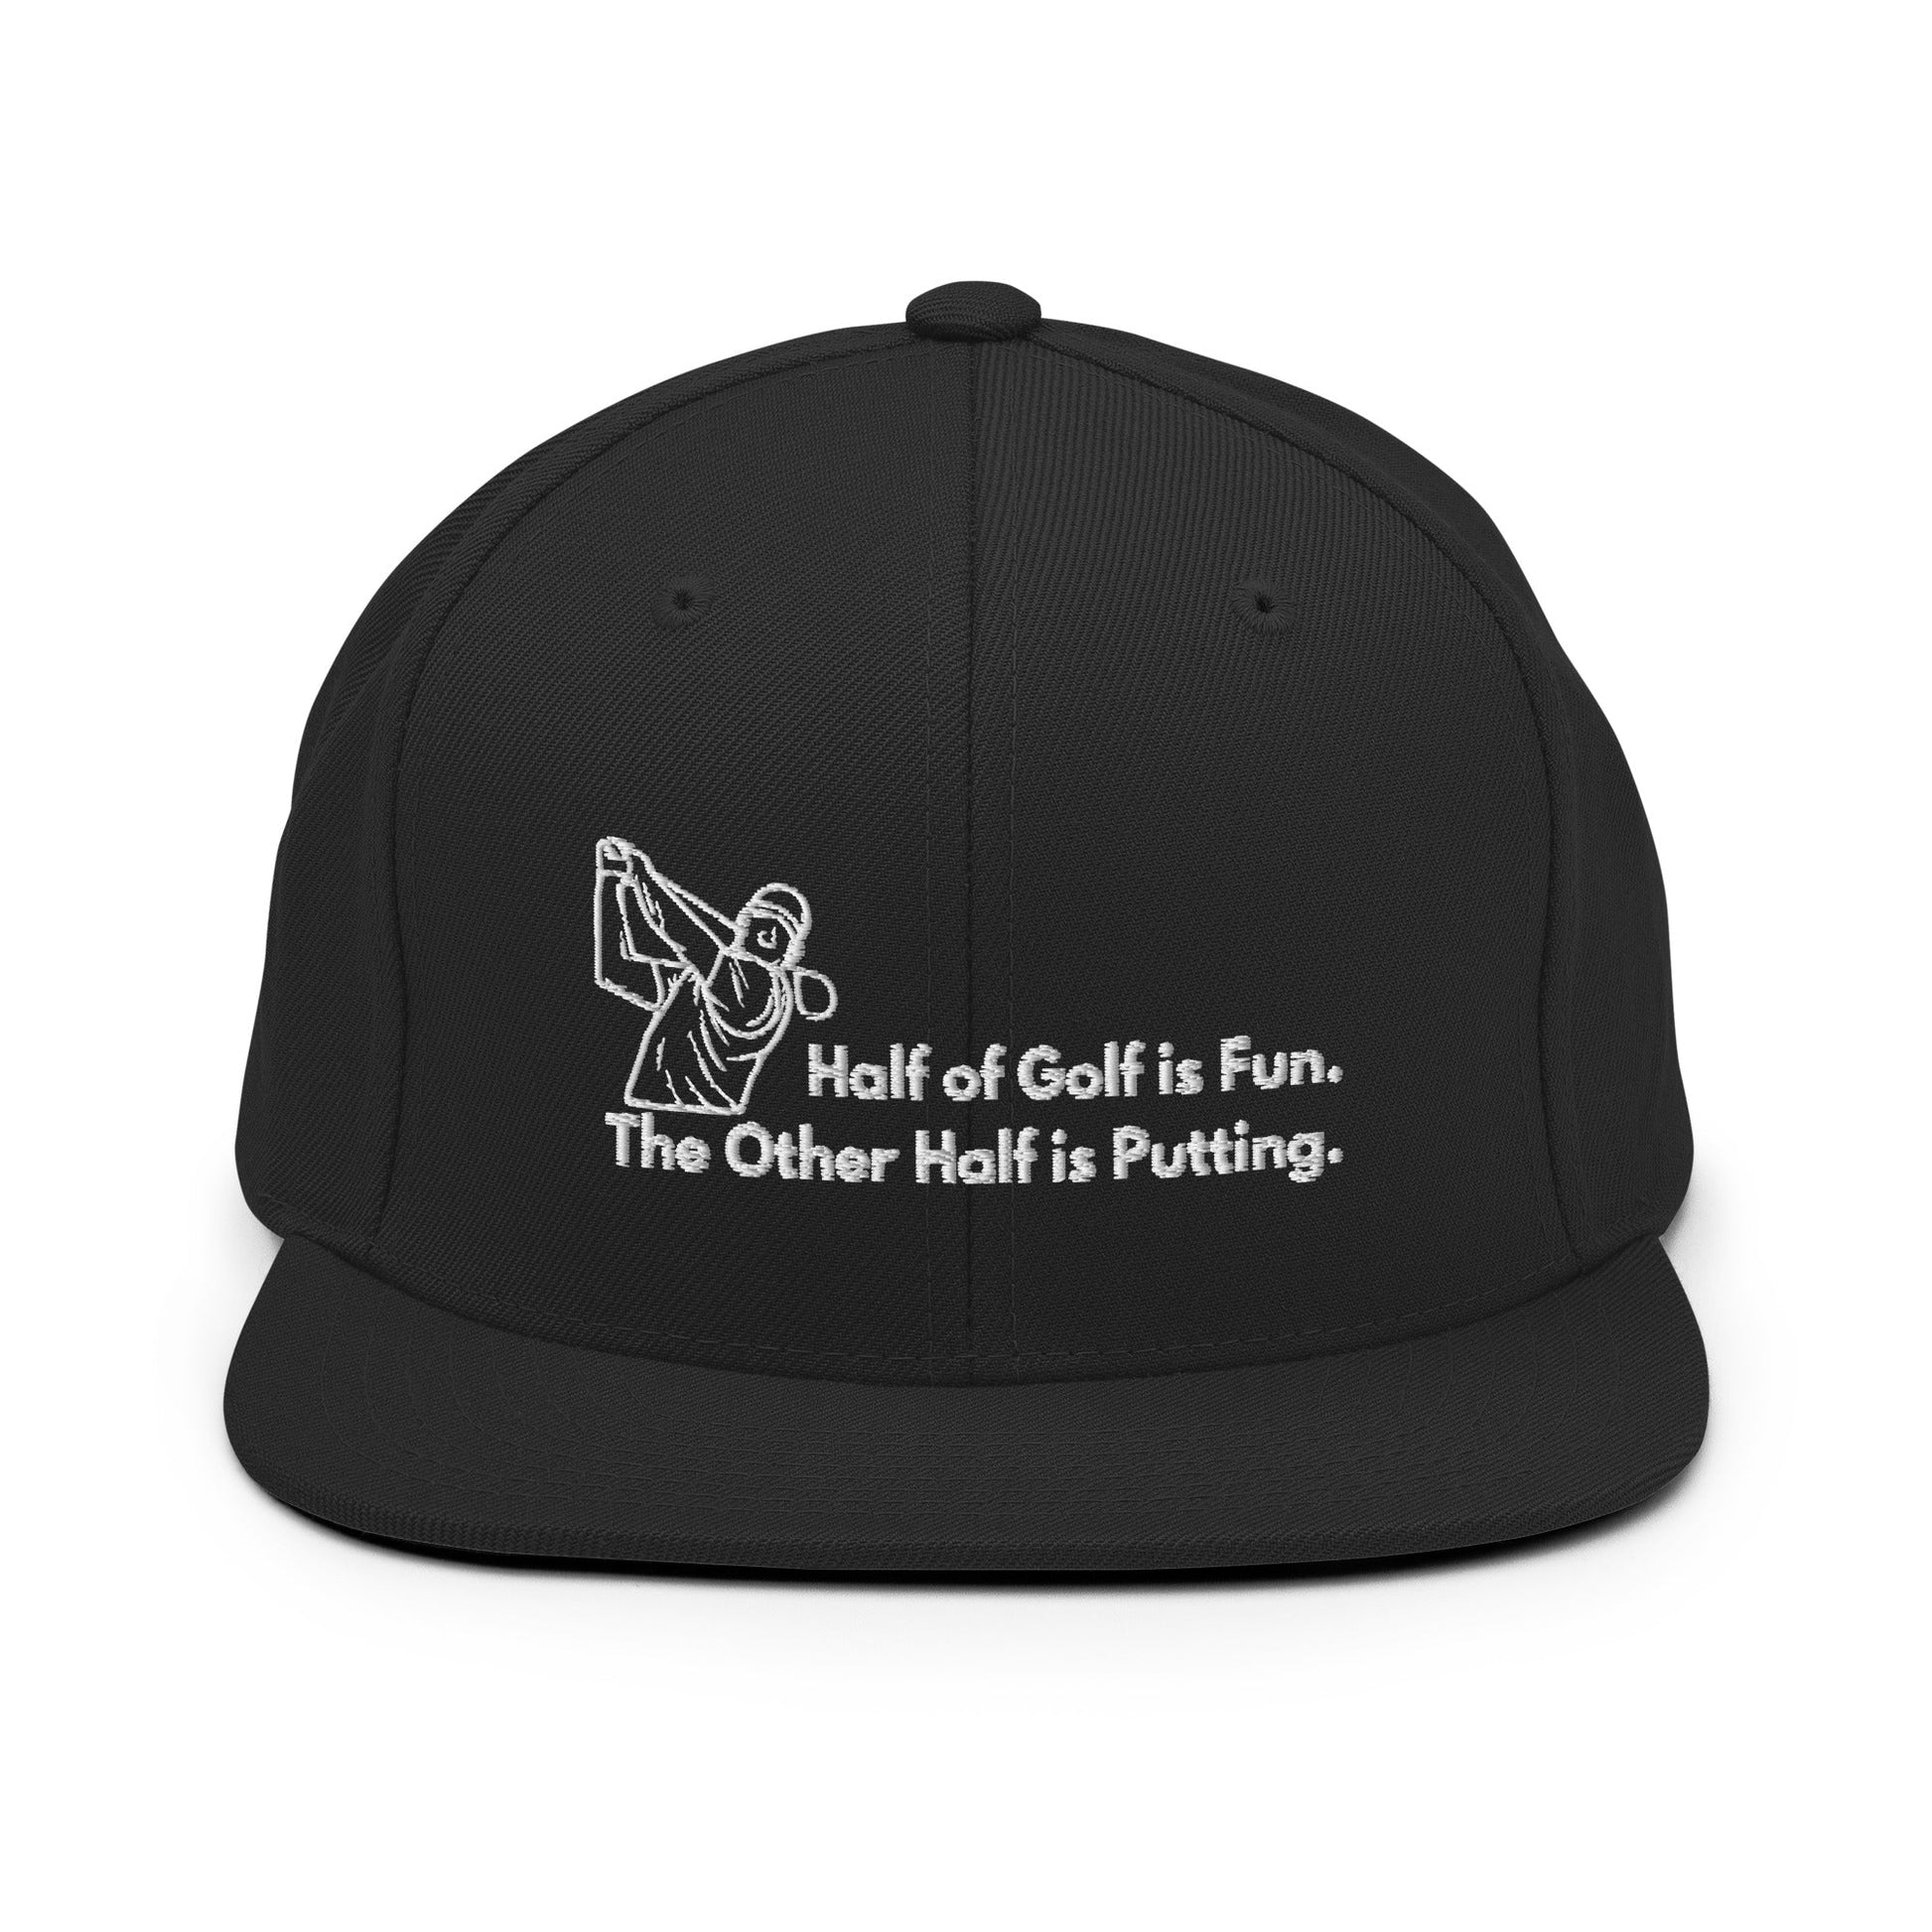 Funny Golfer Gifts  Snapback Hat Black Half of Golf is Fun Snapback Hat